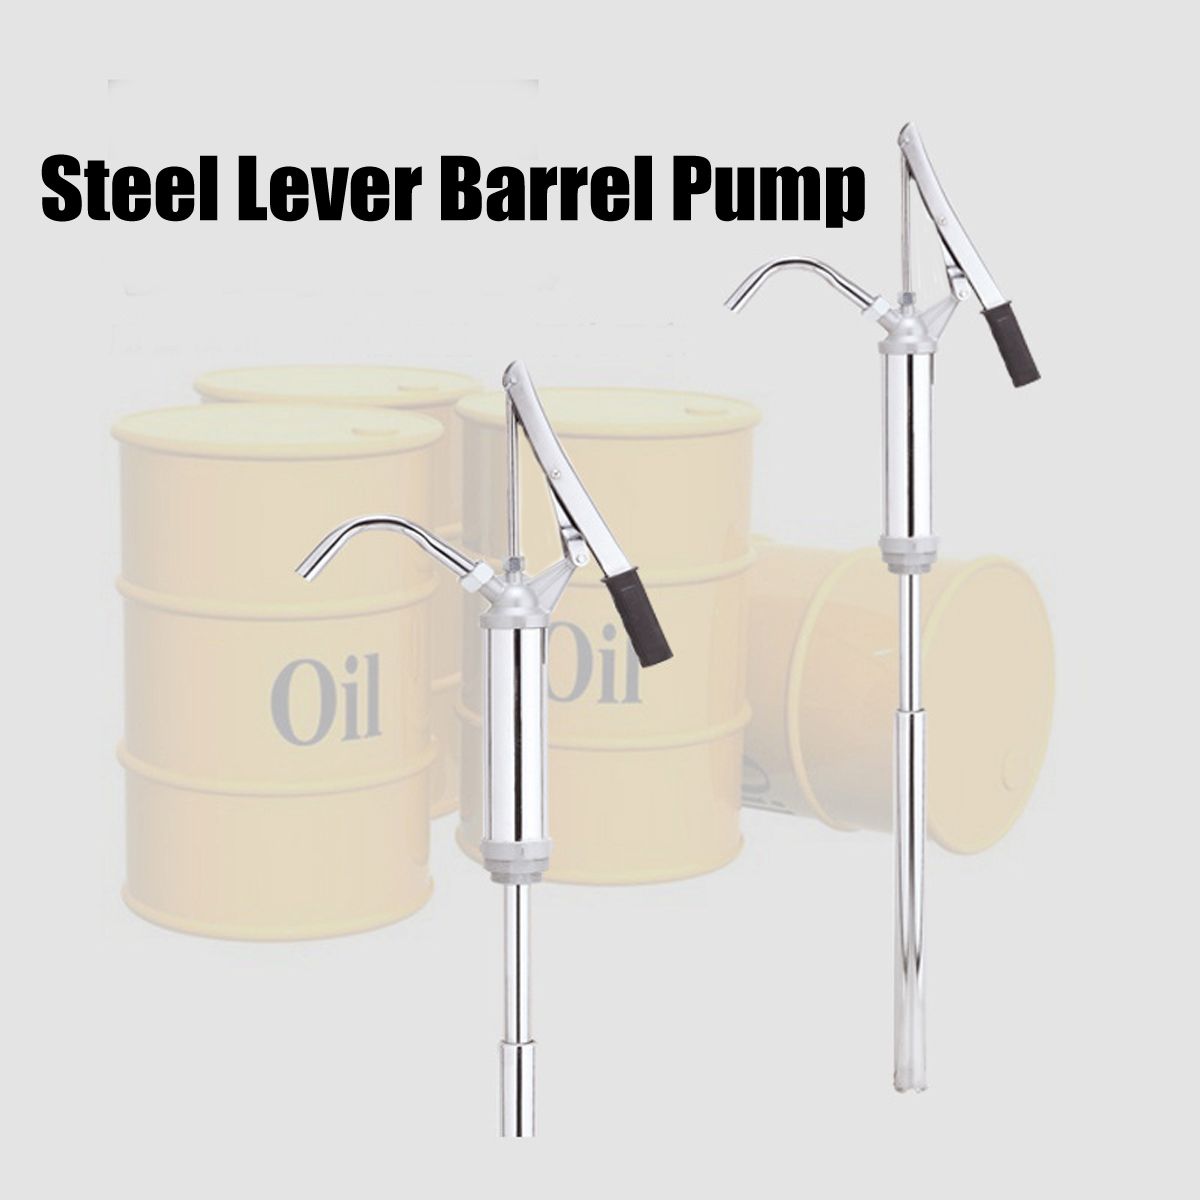 15-55-Gallon-Drum-Steel-Lever-Barrel-Pump-Lubricant-Solvent-1-12-2-Inch-Bung-1356502